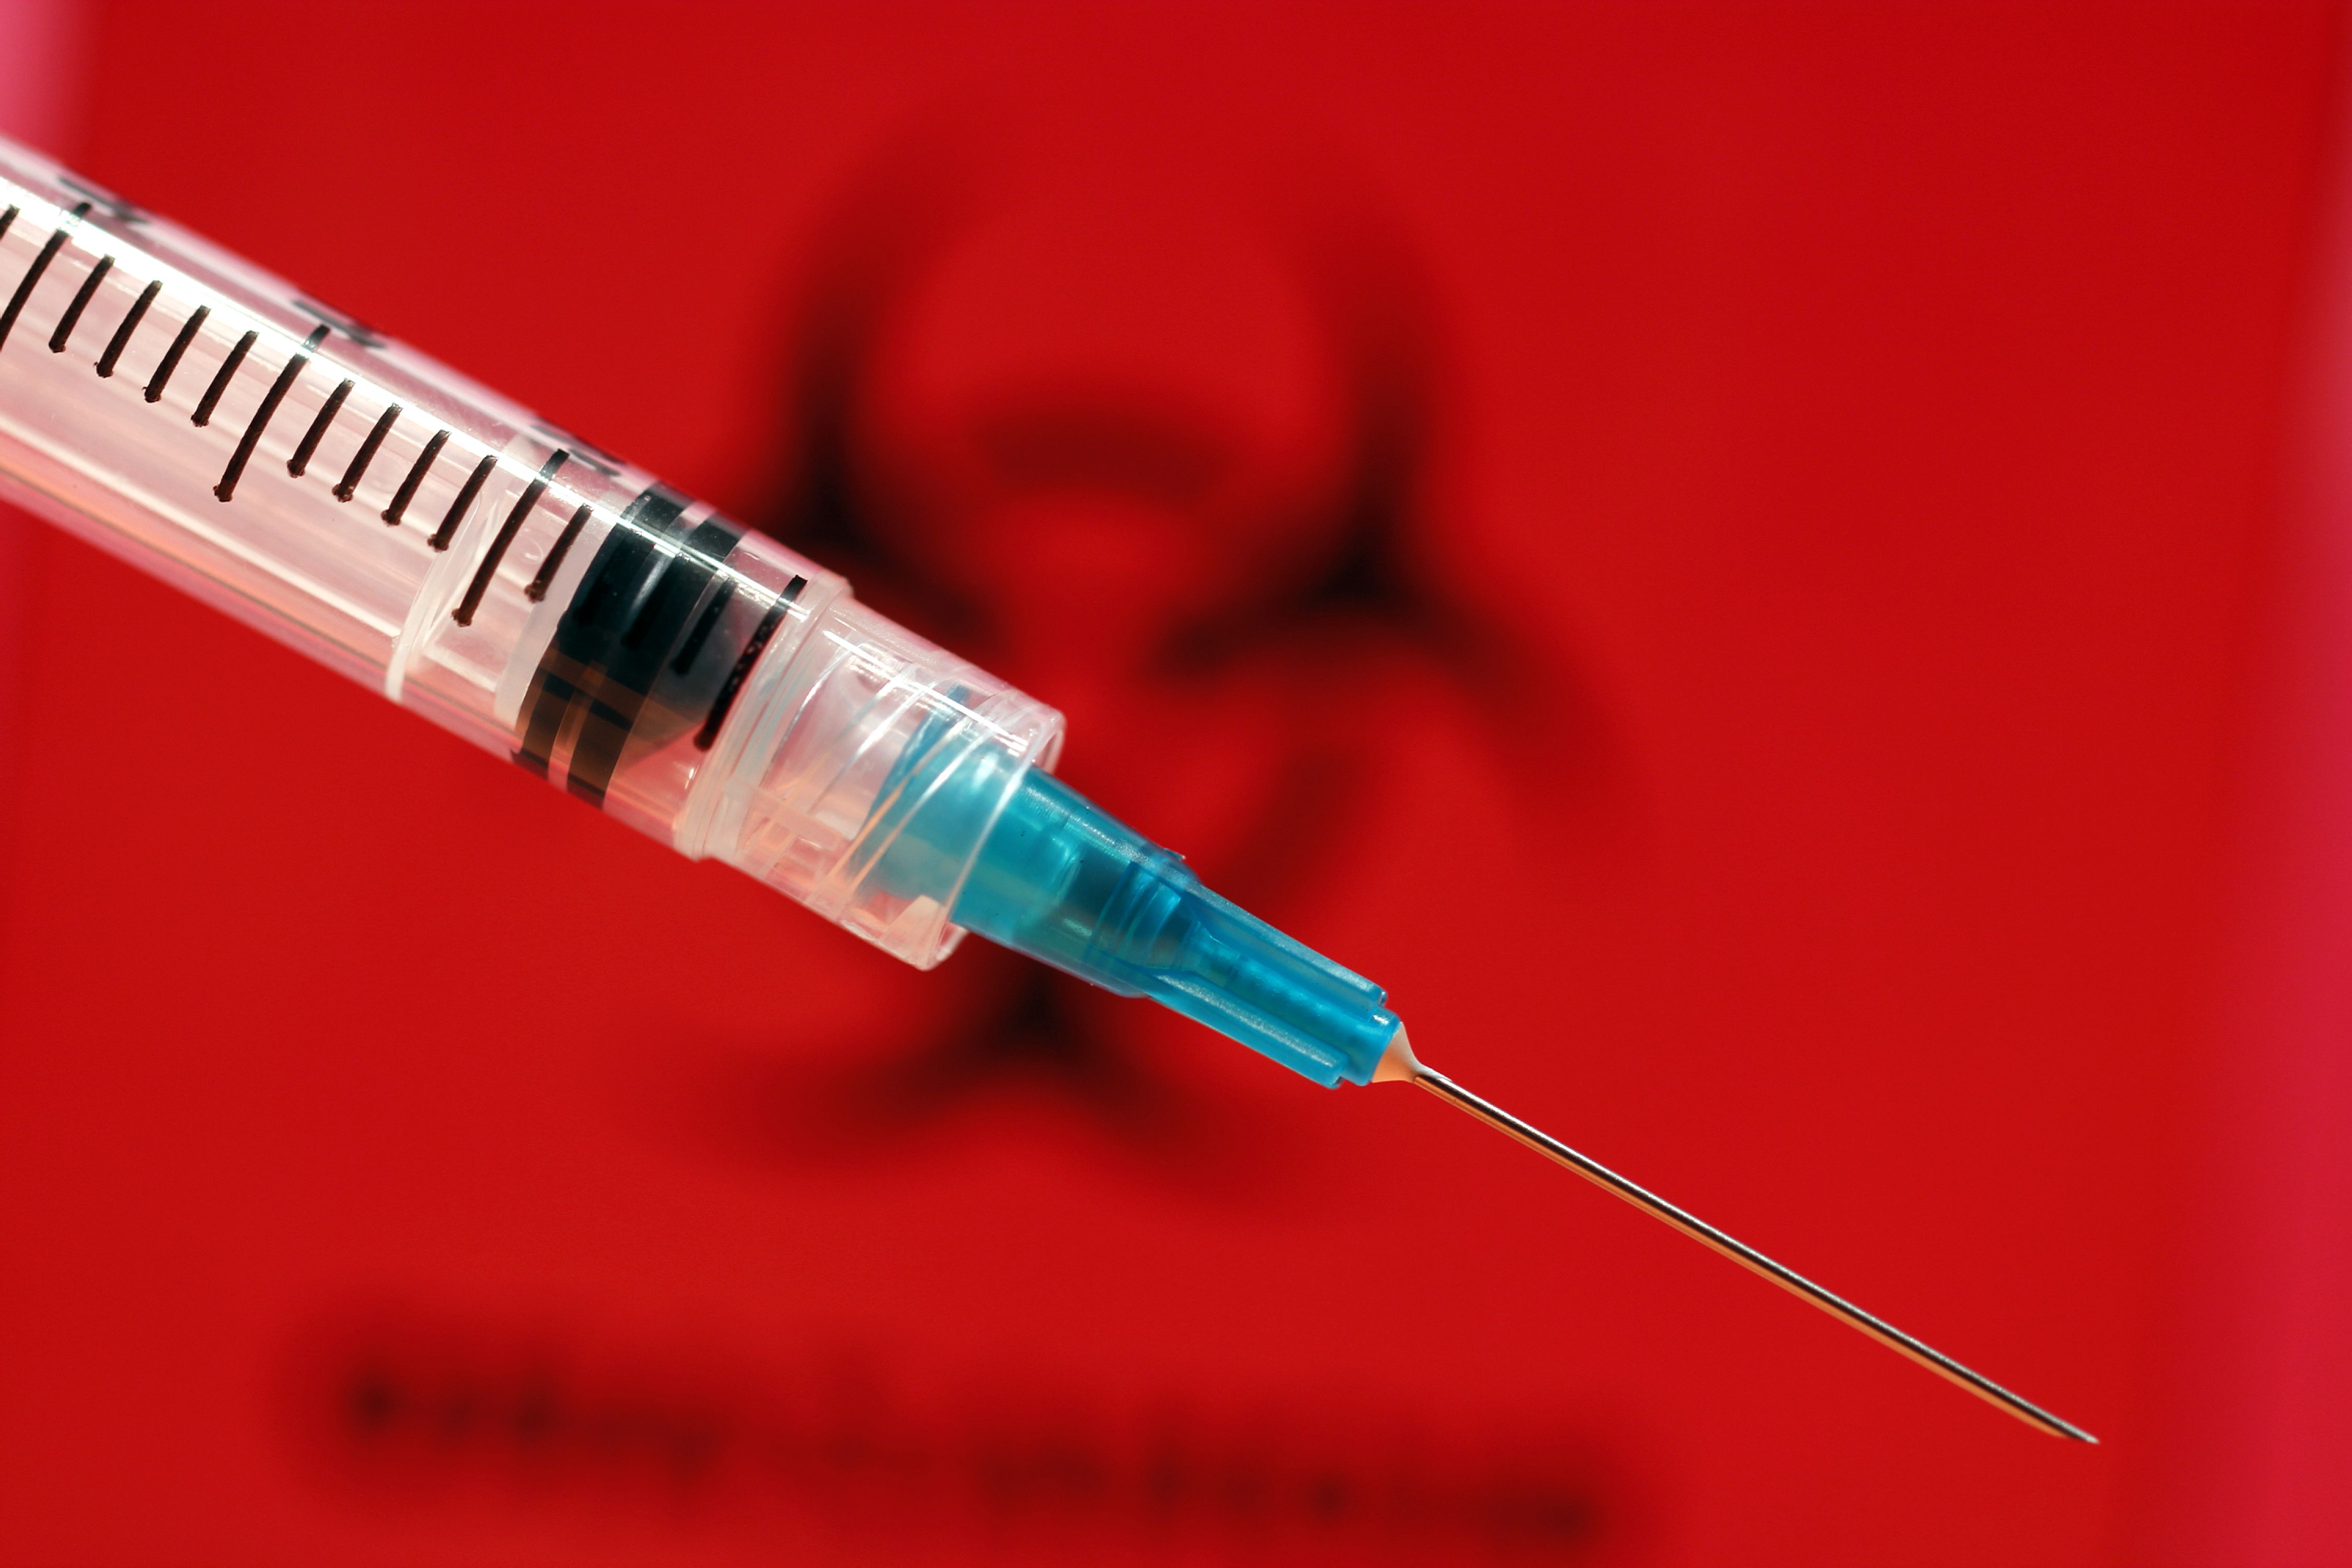 Centre has allocated only 15 lakh Covid vaccine doses to Delhi in July: Sisodia